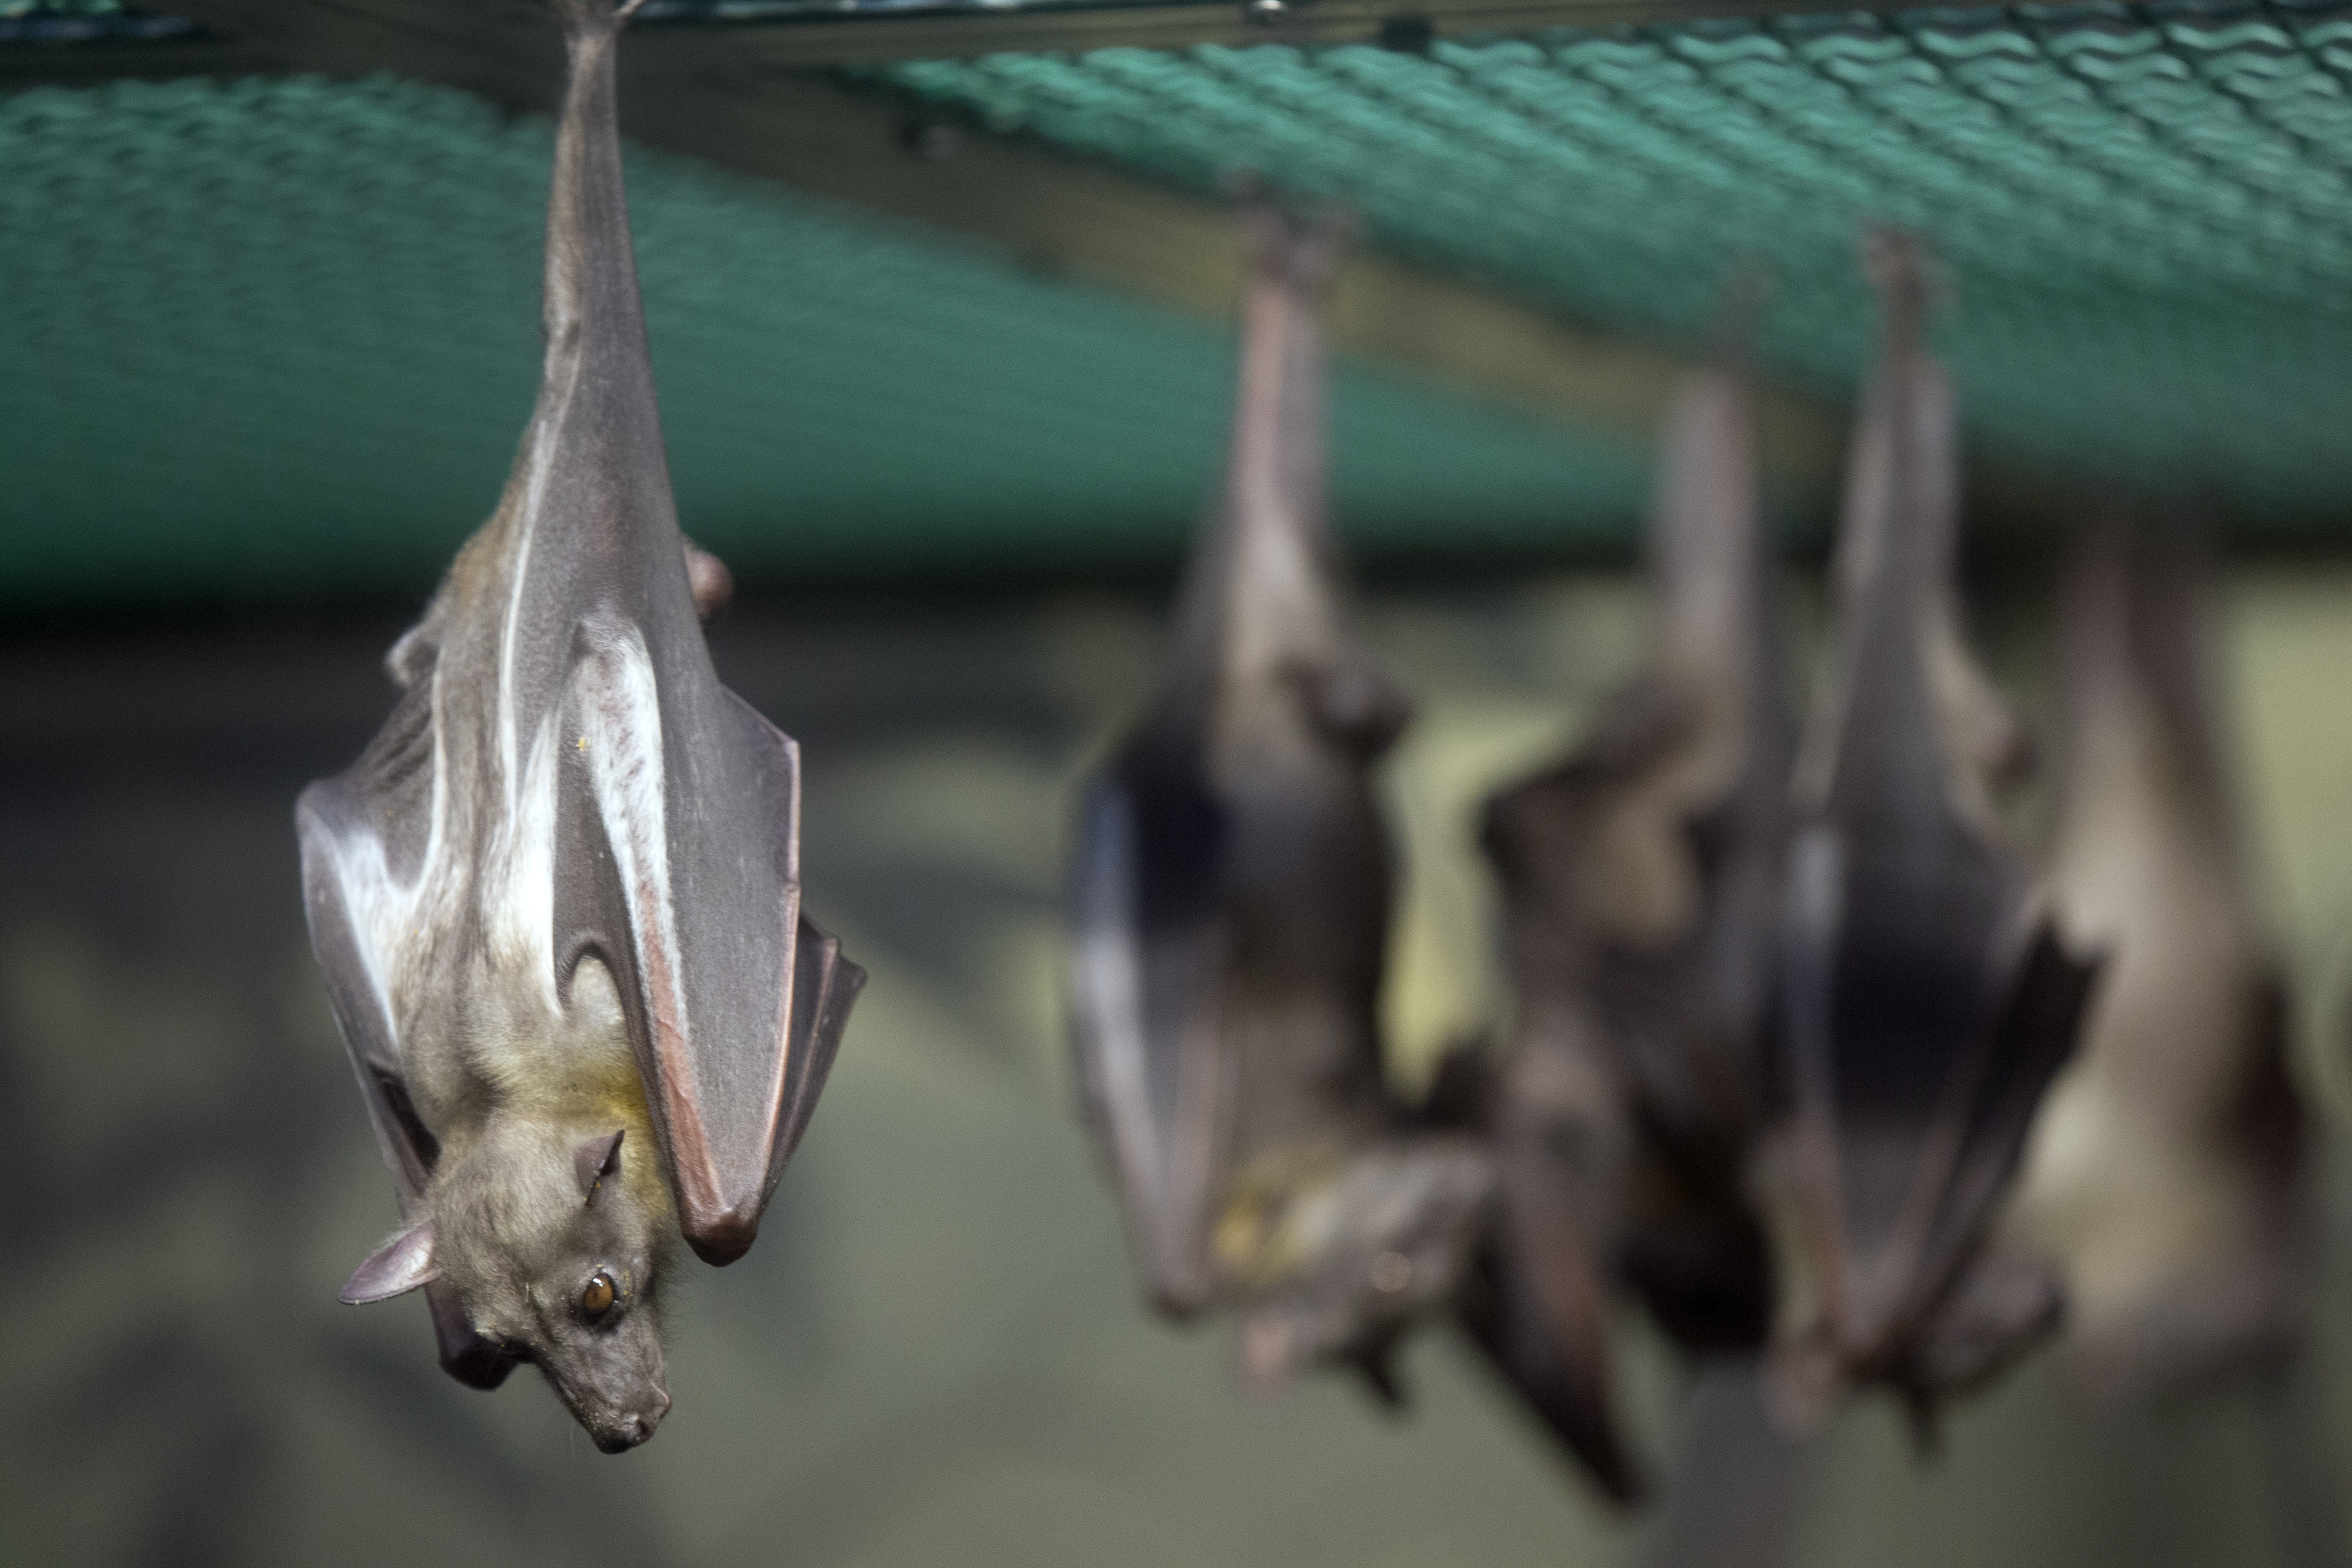 jamaican fruit bat habitat